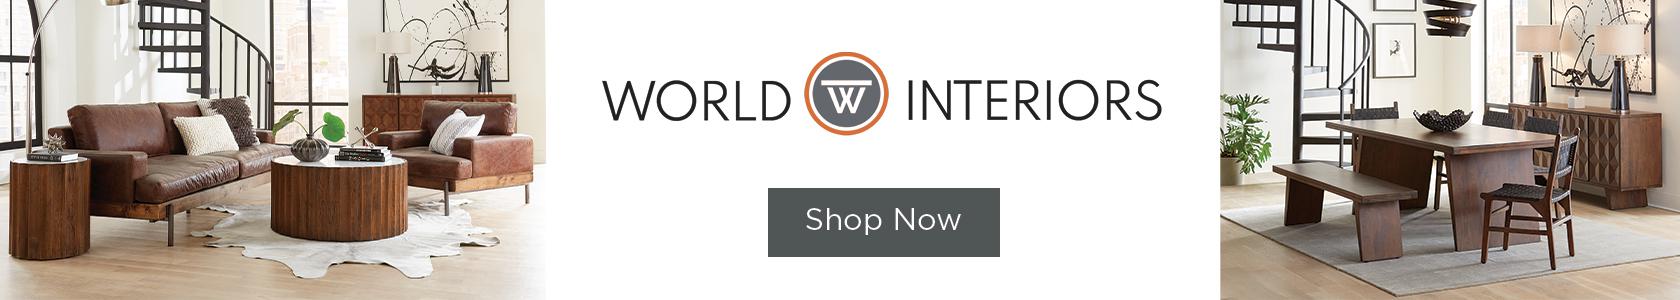 WORLD INTERIORS banner